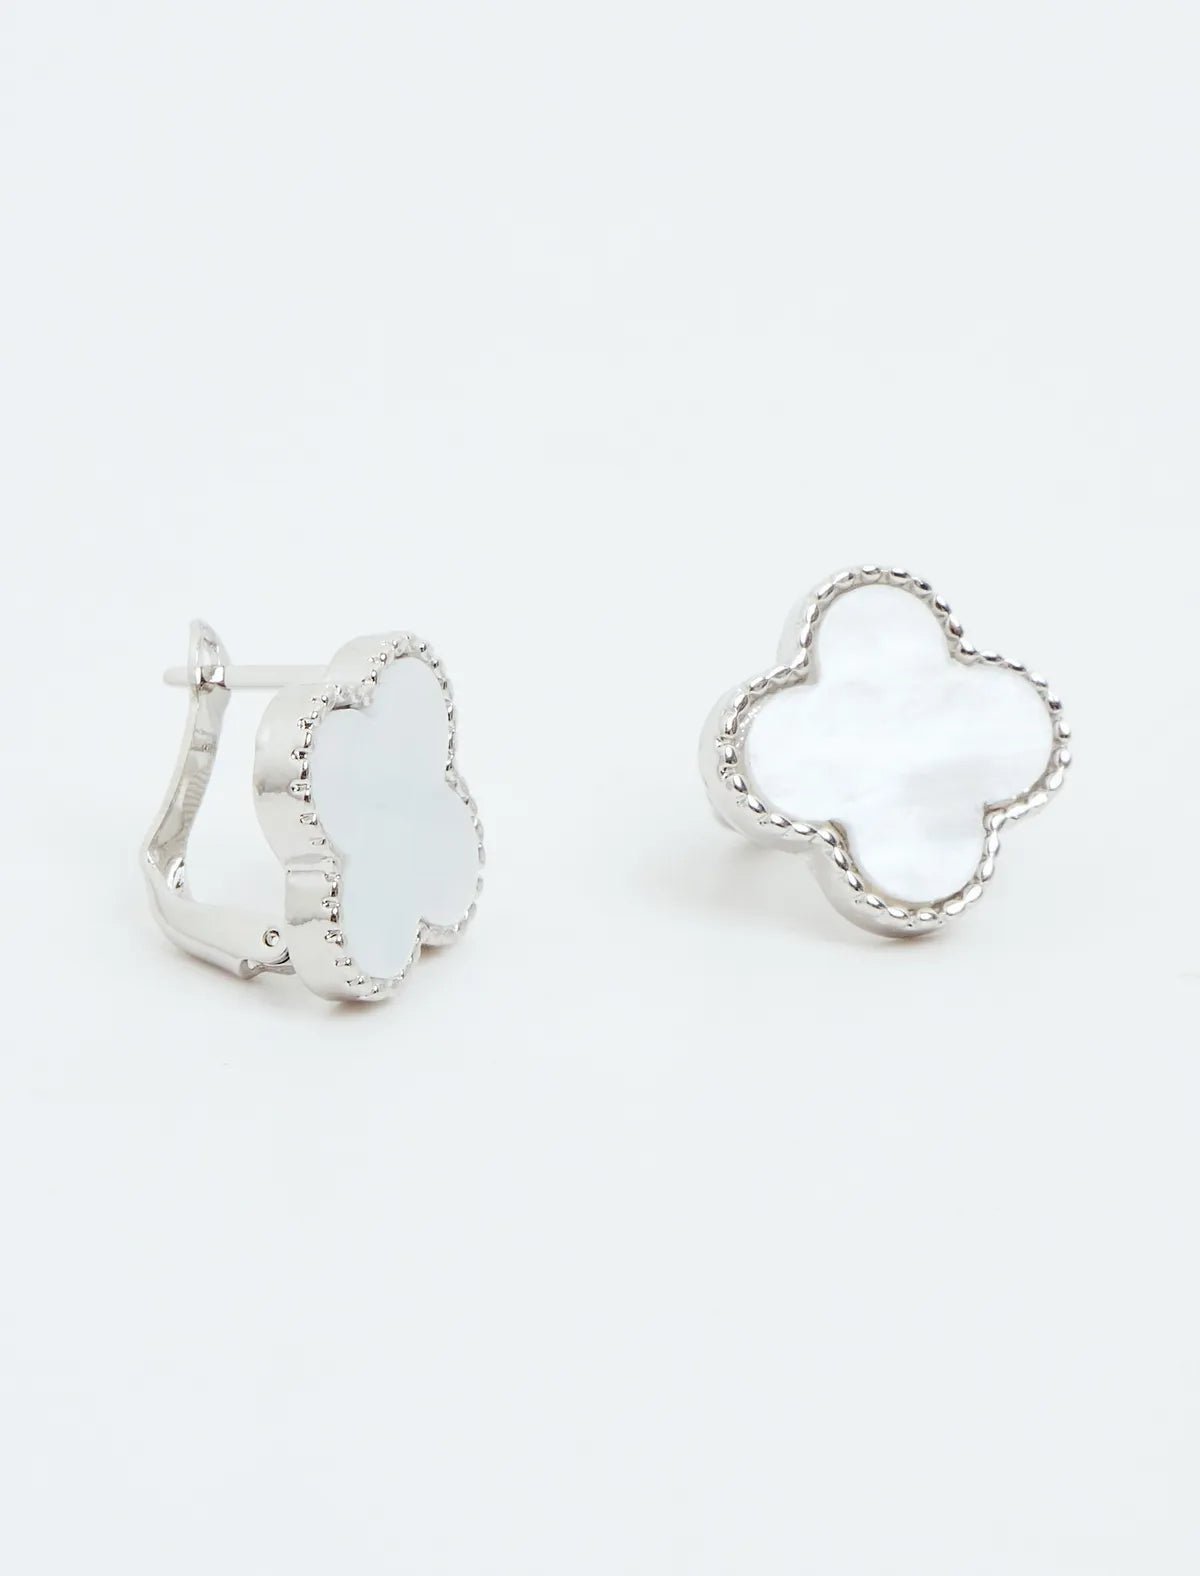 Stylish Earrings with Gray Clover Figures - Lebbse